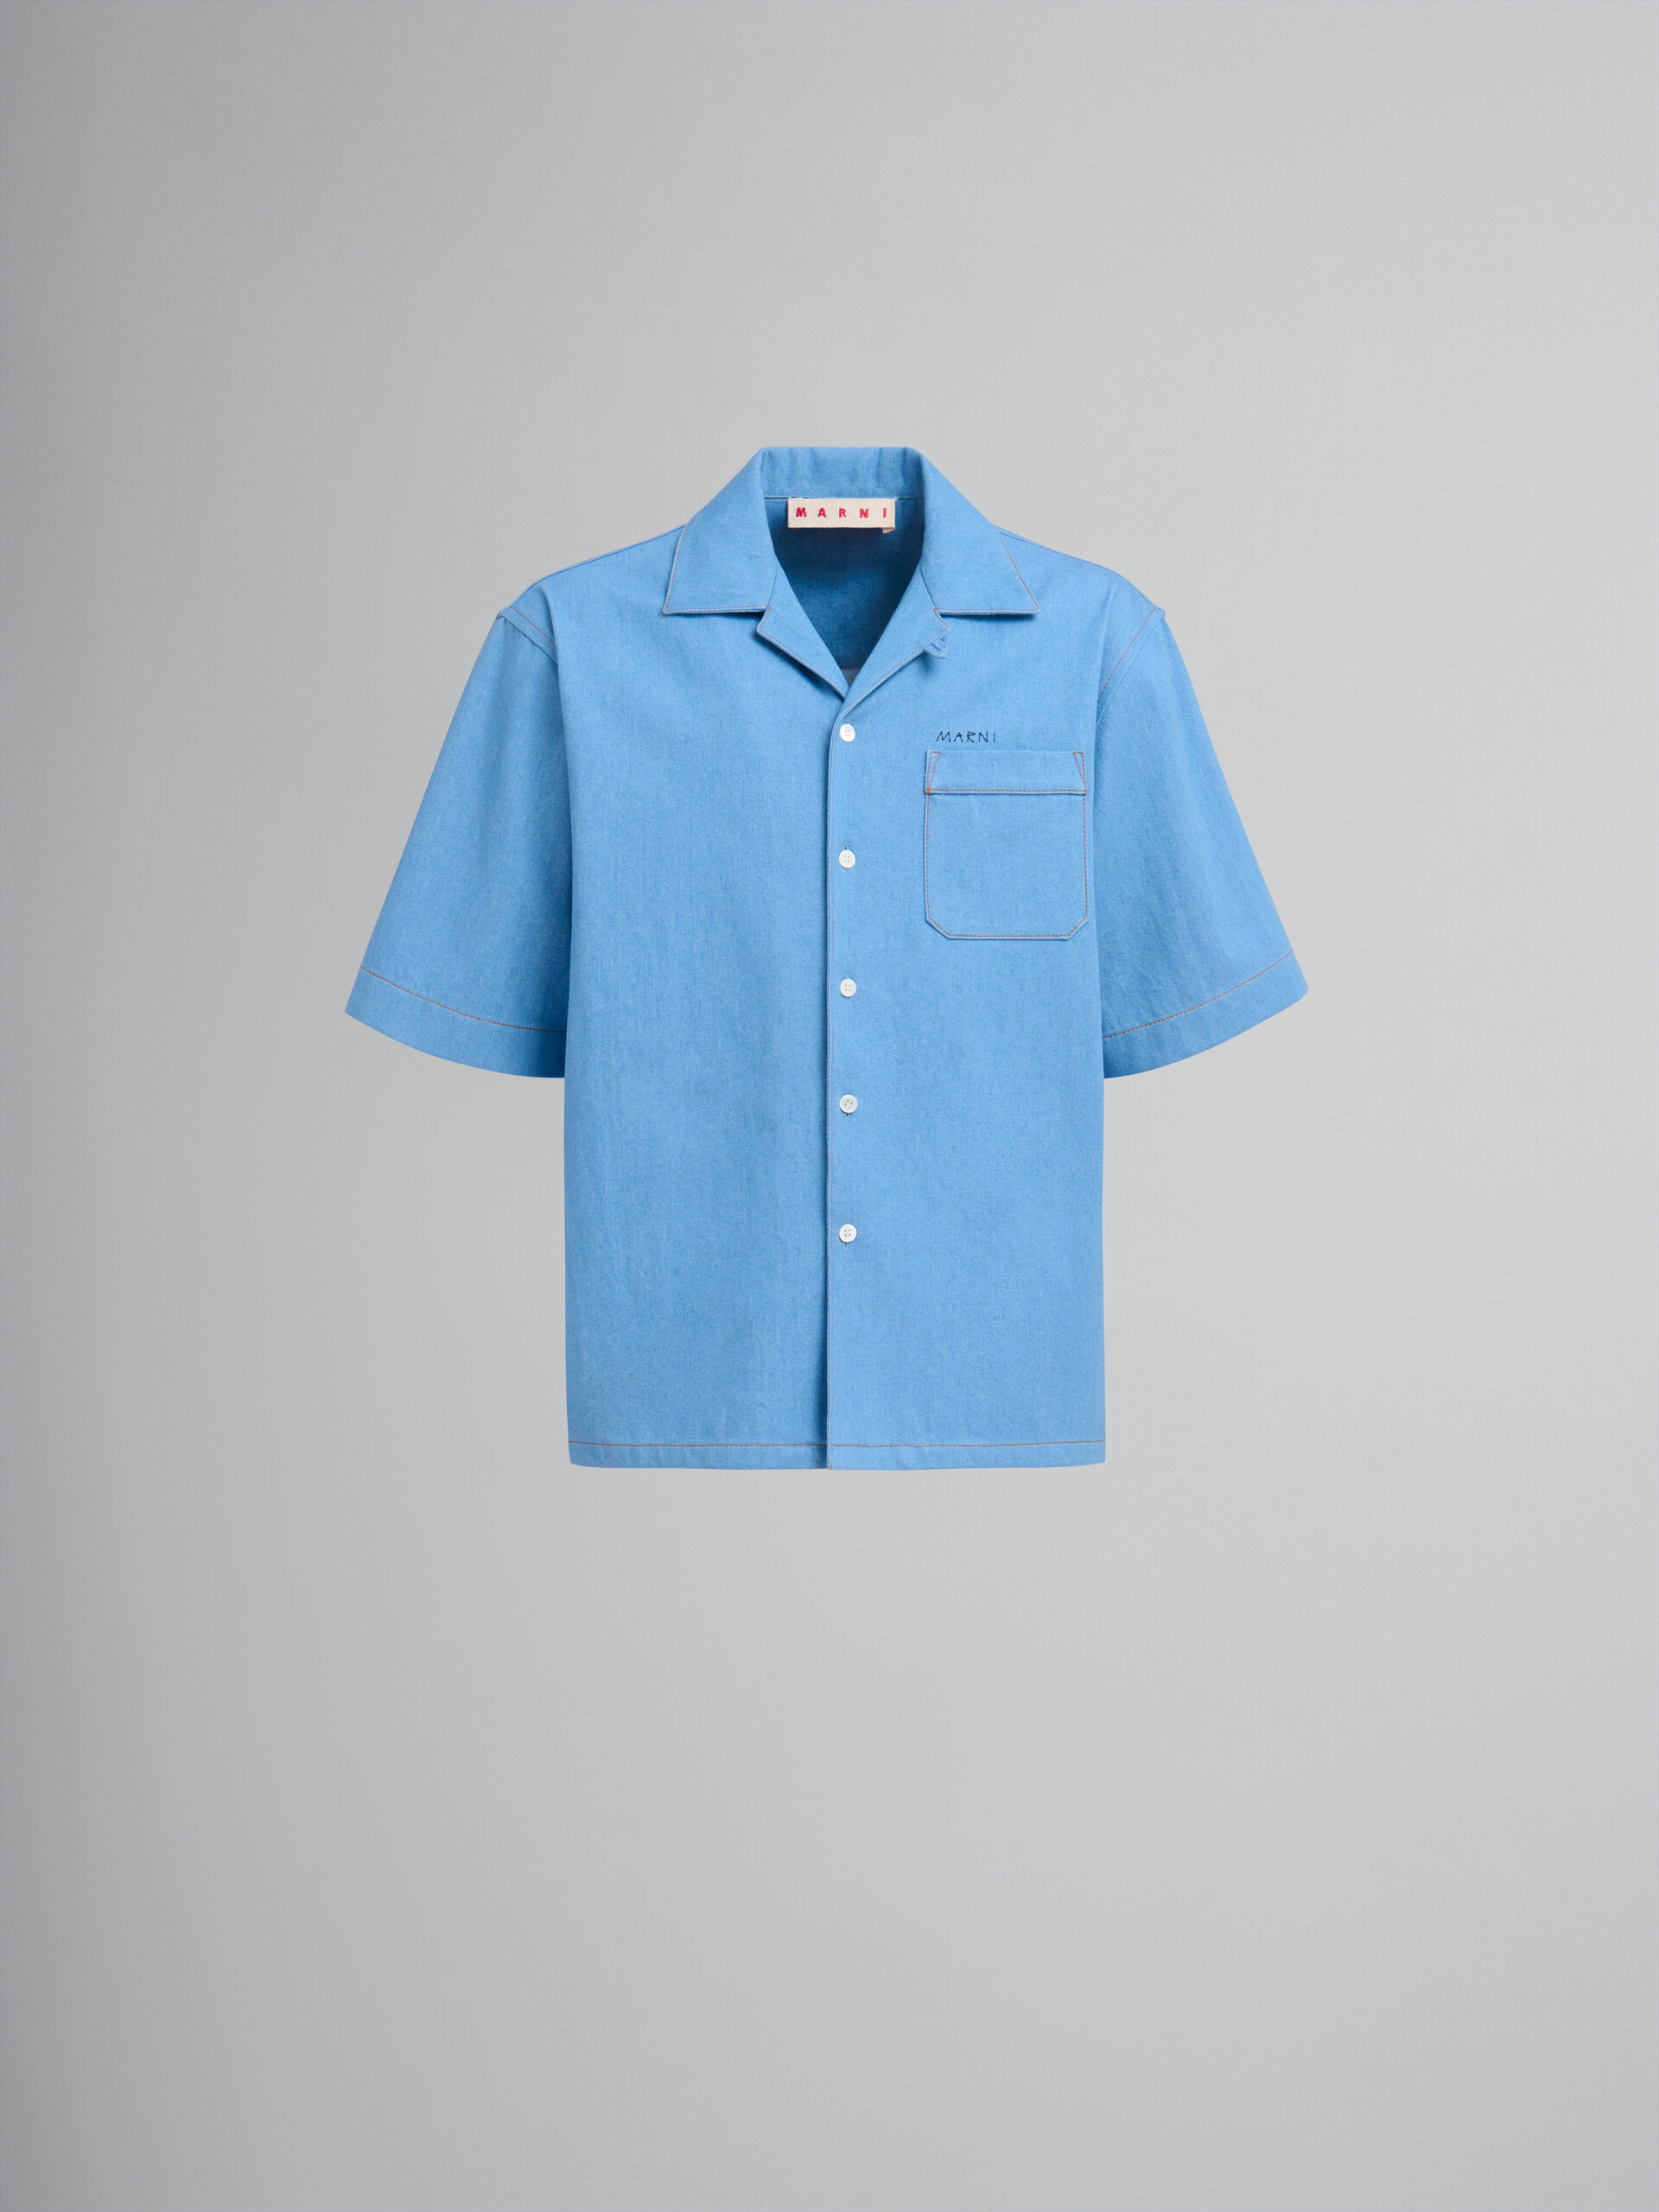 Blue denim bowling shirt with Marni mending logo - Shirts - Image 1